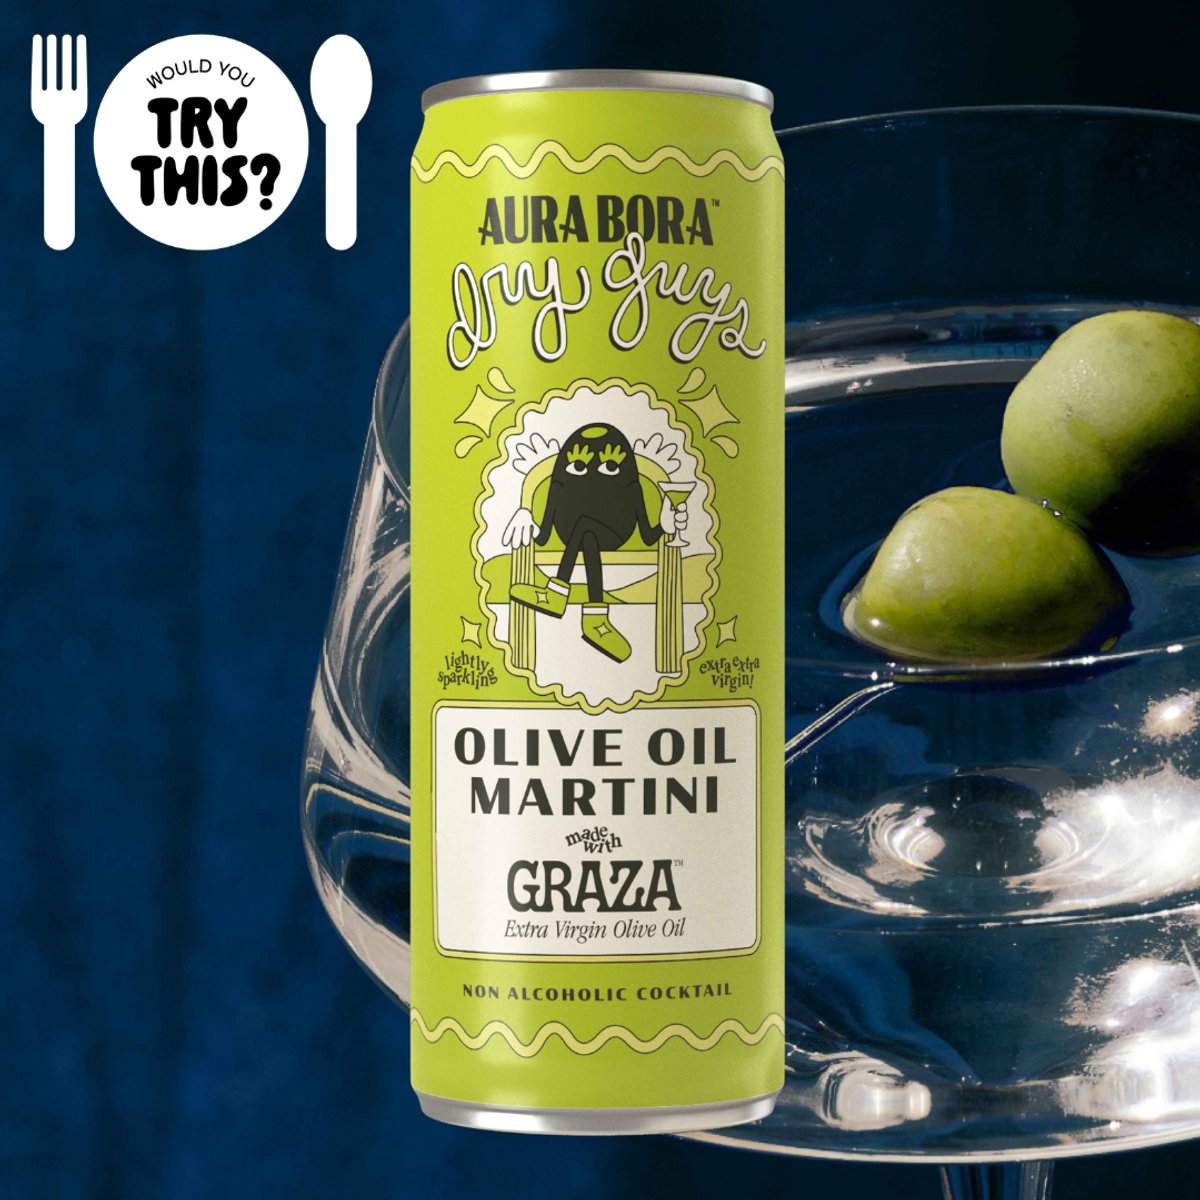 olive oil martini from aura bora and graza